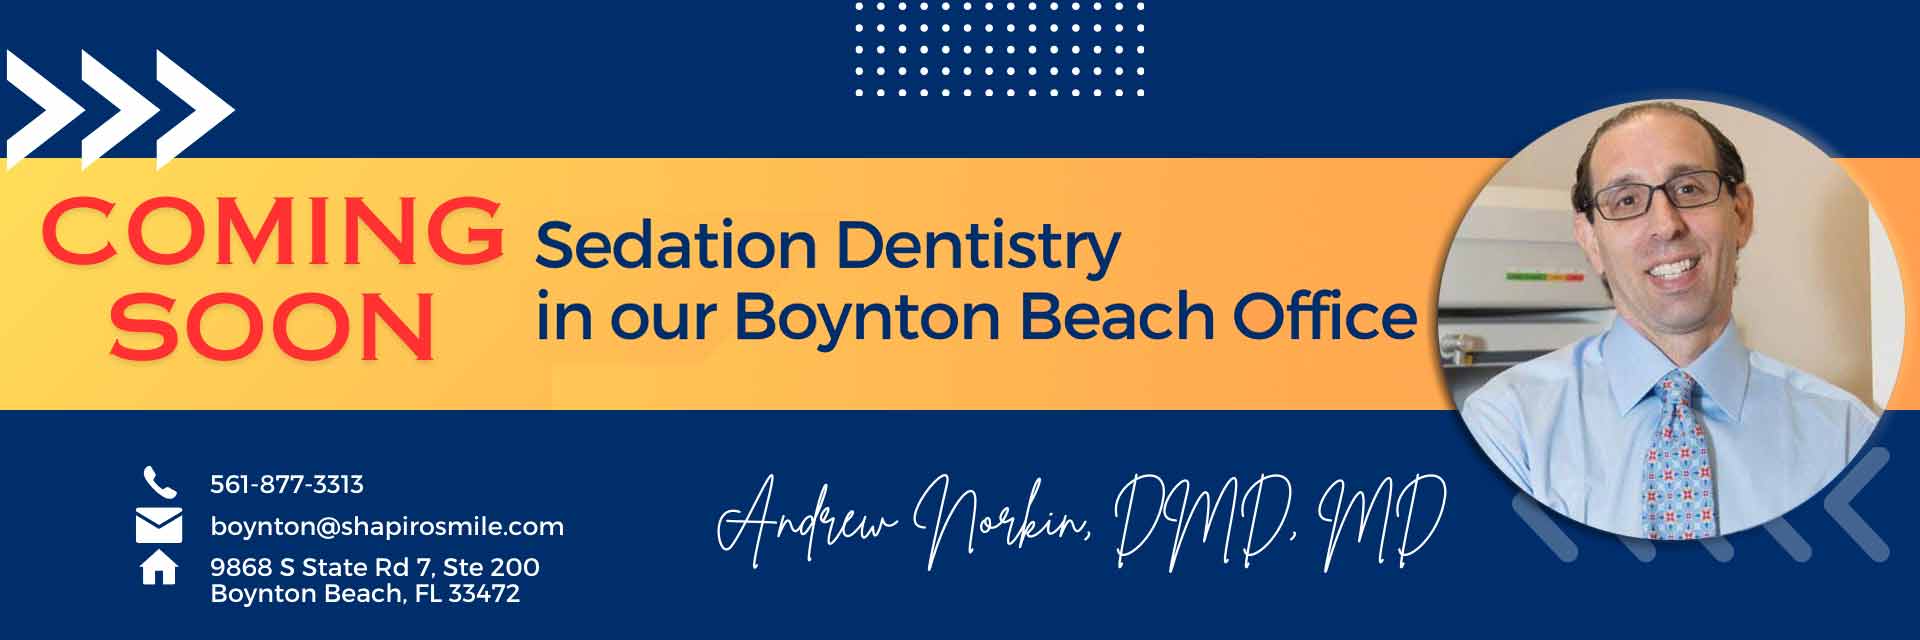 Sedation Dentistry Now Available In Our Boynton Beach Office